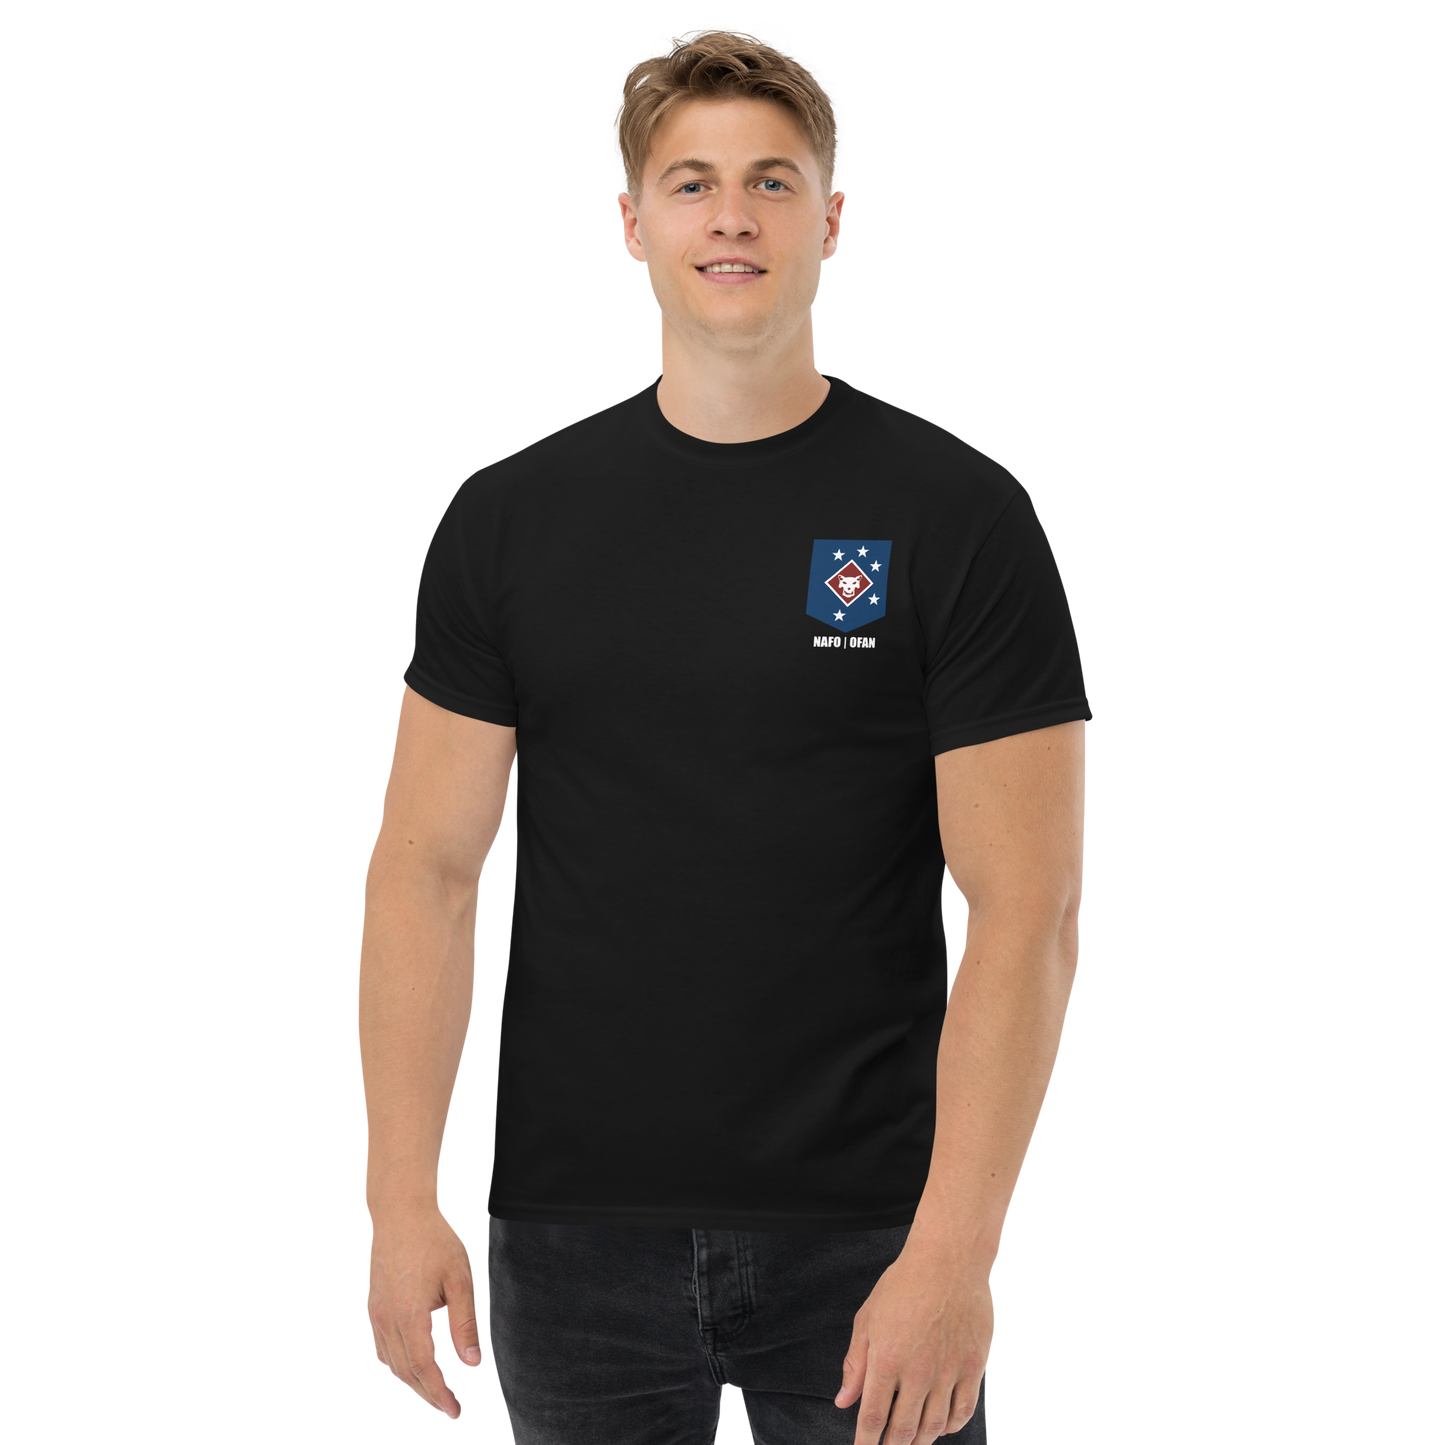 NAFO Raider Btn. T-Shirt